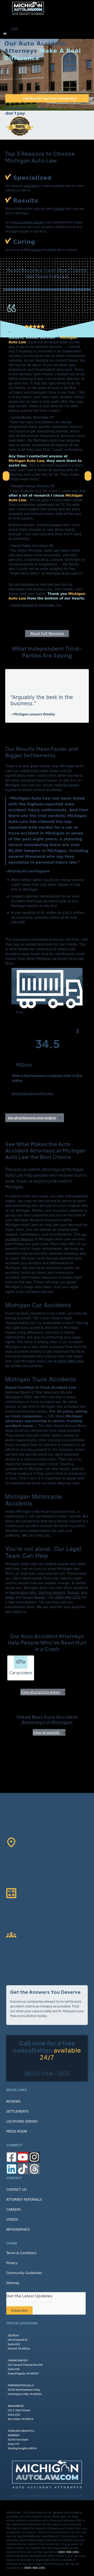 Michigan Auto Law - Detroit MI Lawyers